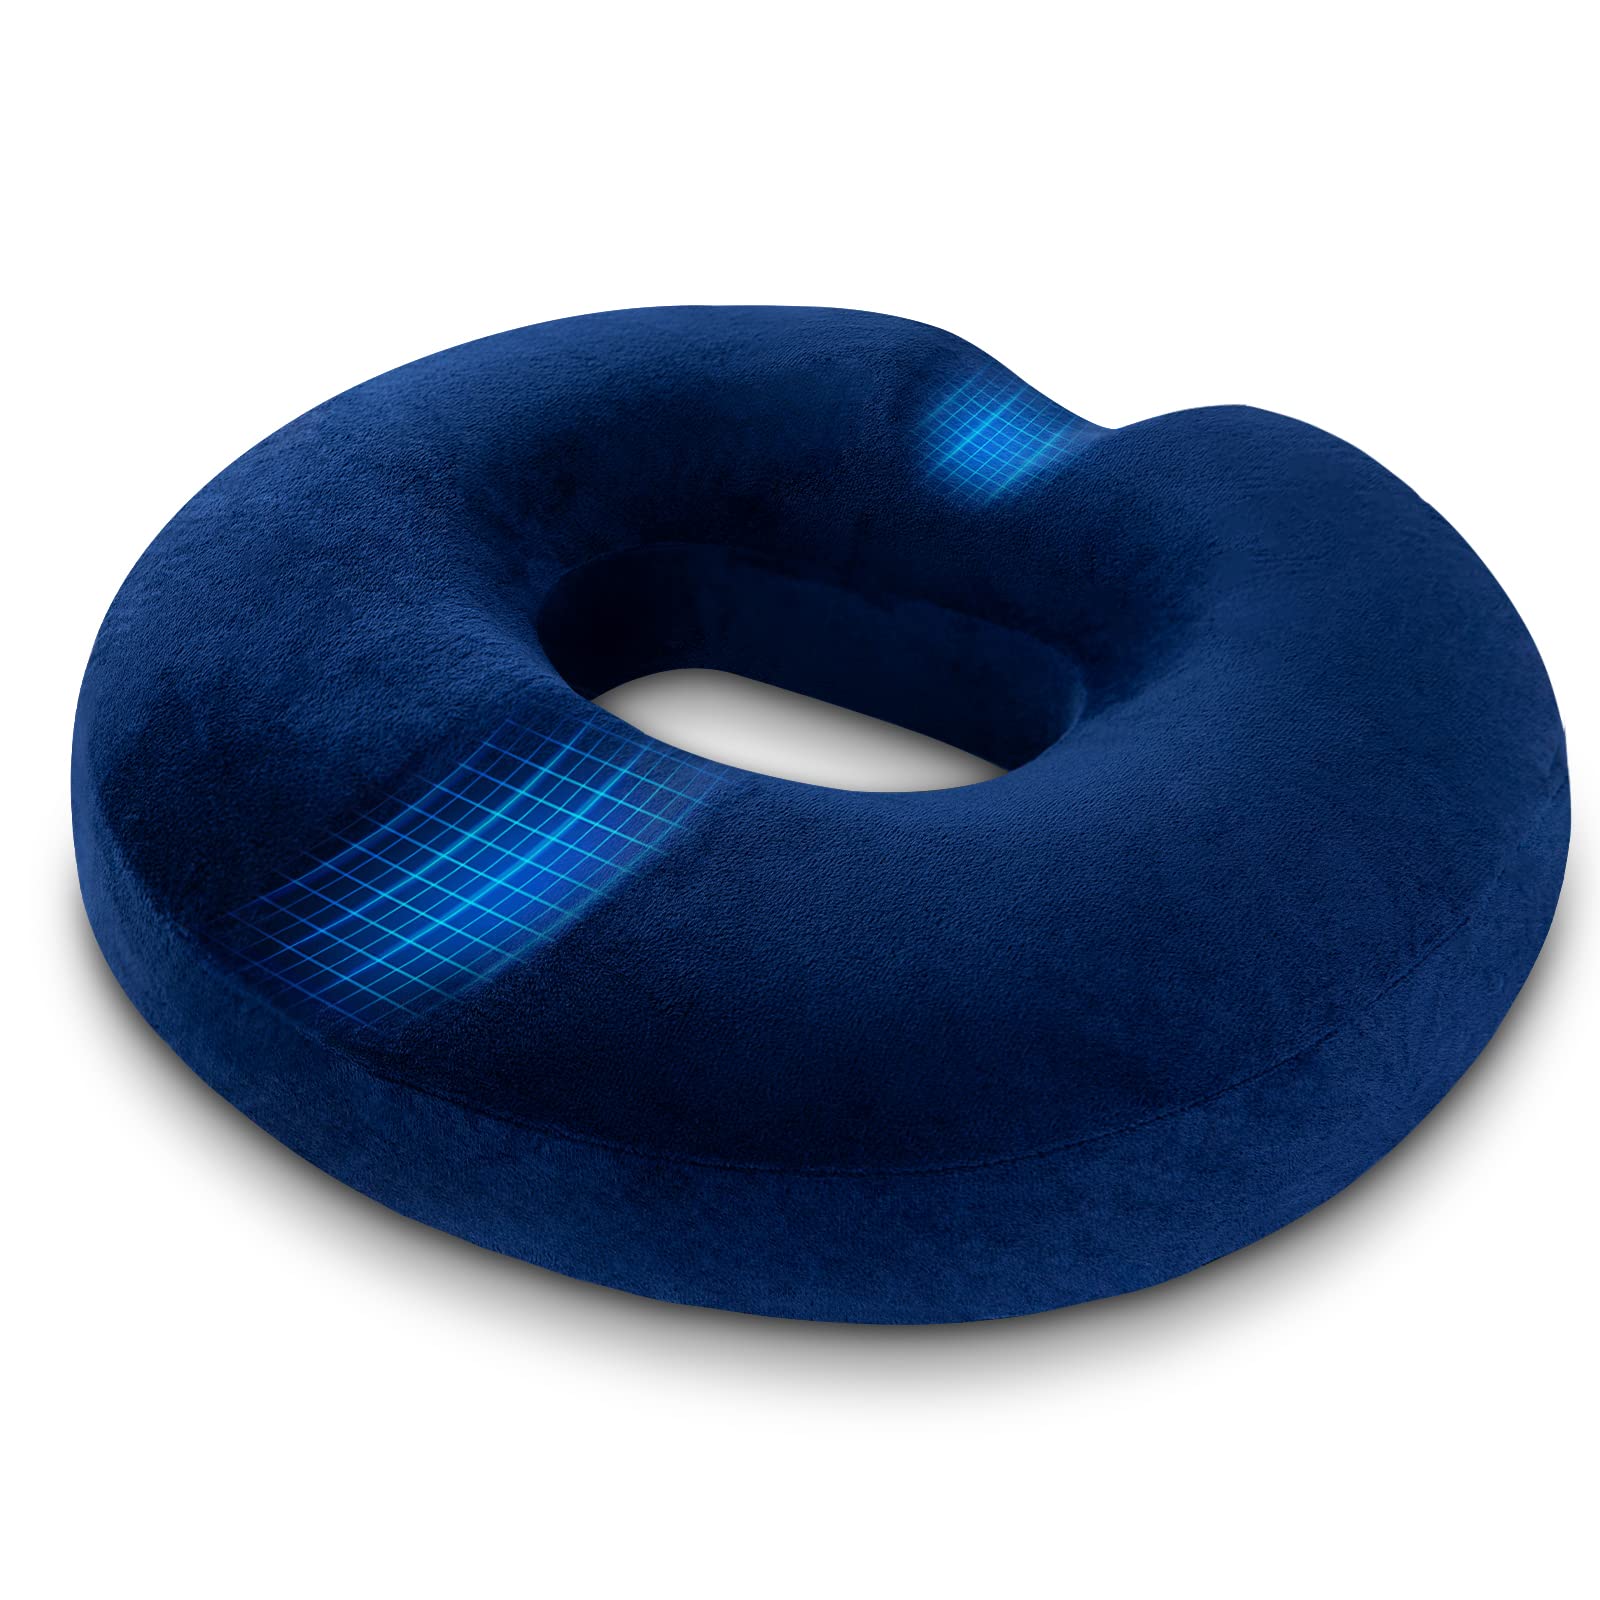 LILLYZEN Donut Pillow for Tailbone Pain Relief Memory Foam Seat Cushion Orthopedic Seat Pressure Relief Sitting Coccyx Sciatica Hemorrhoid Pregnancy